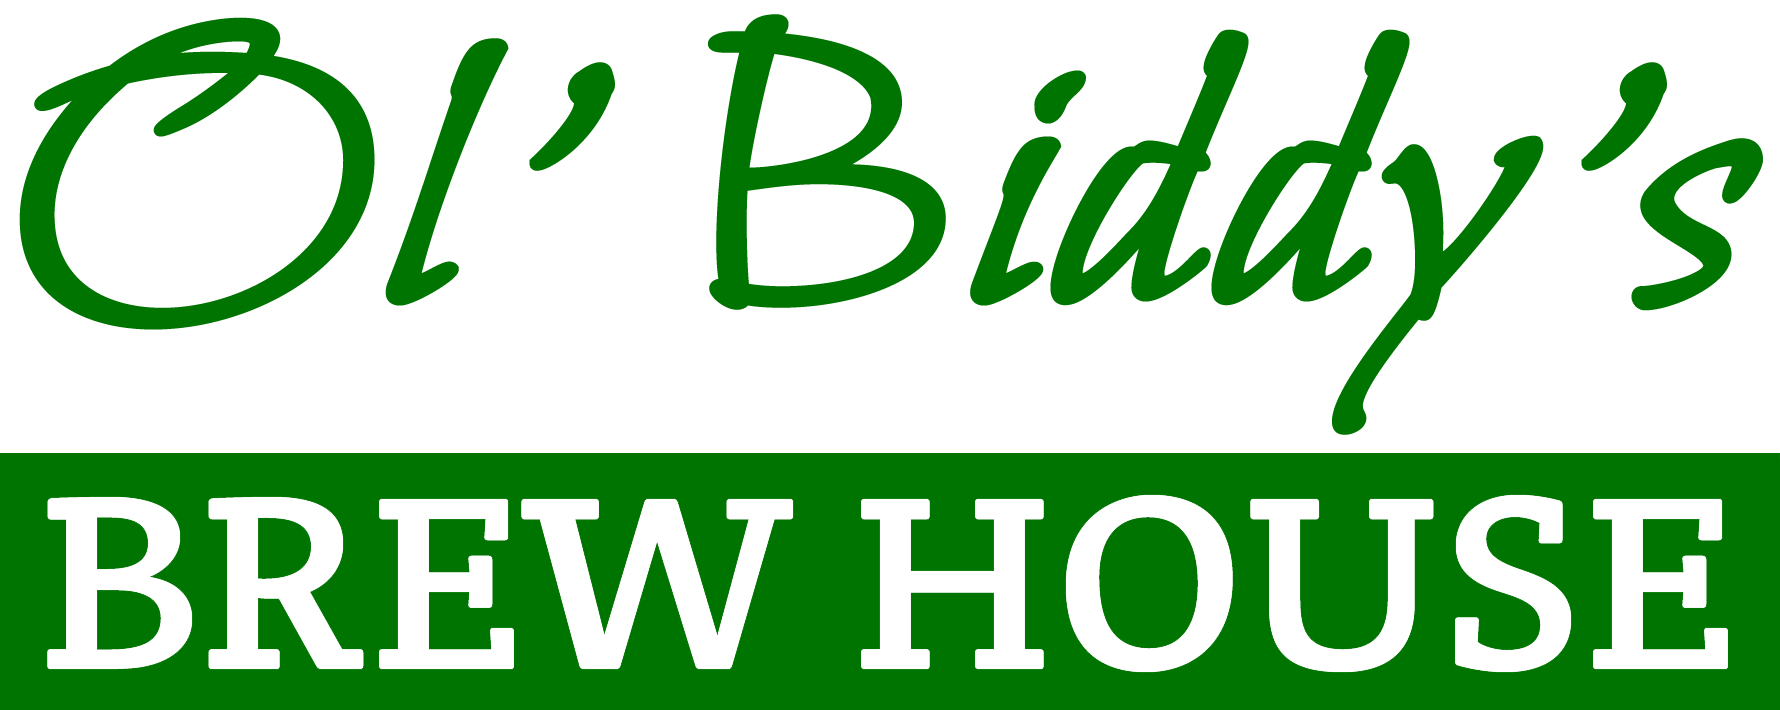 text of ol biddy brew house logo